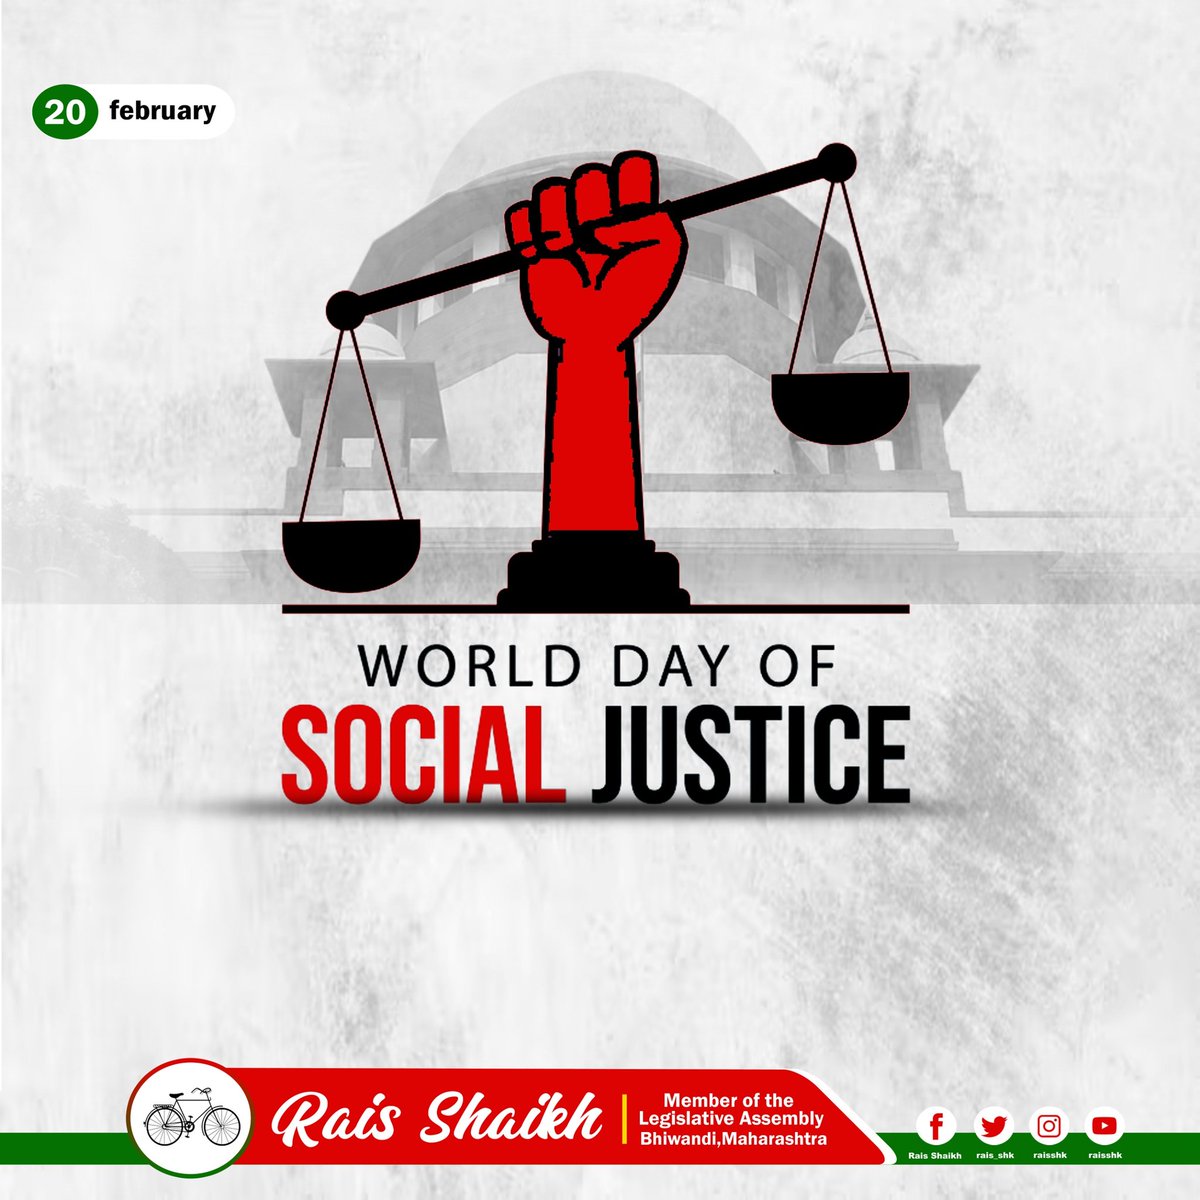 World Day of Social Justice

#SocialJustice, #WorldDayofSocialJustice #EndPoverty, #EndInequality #EndDiscrimination